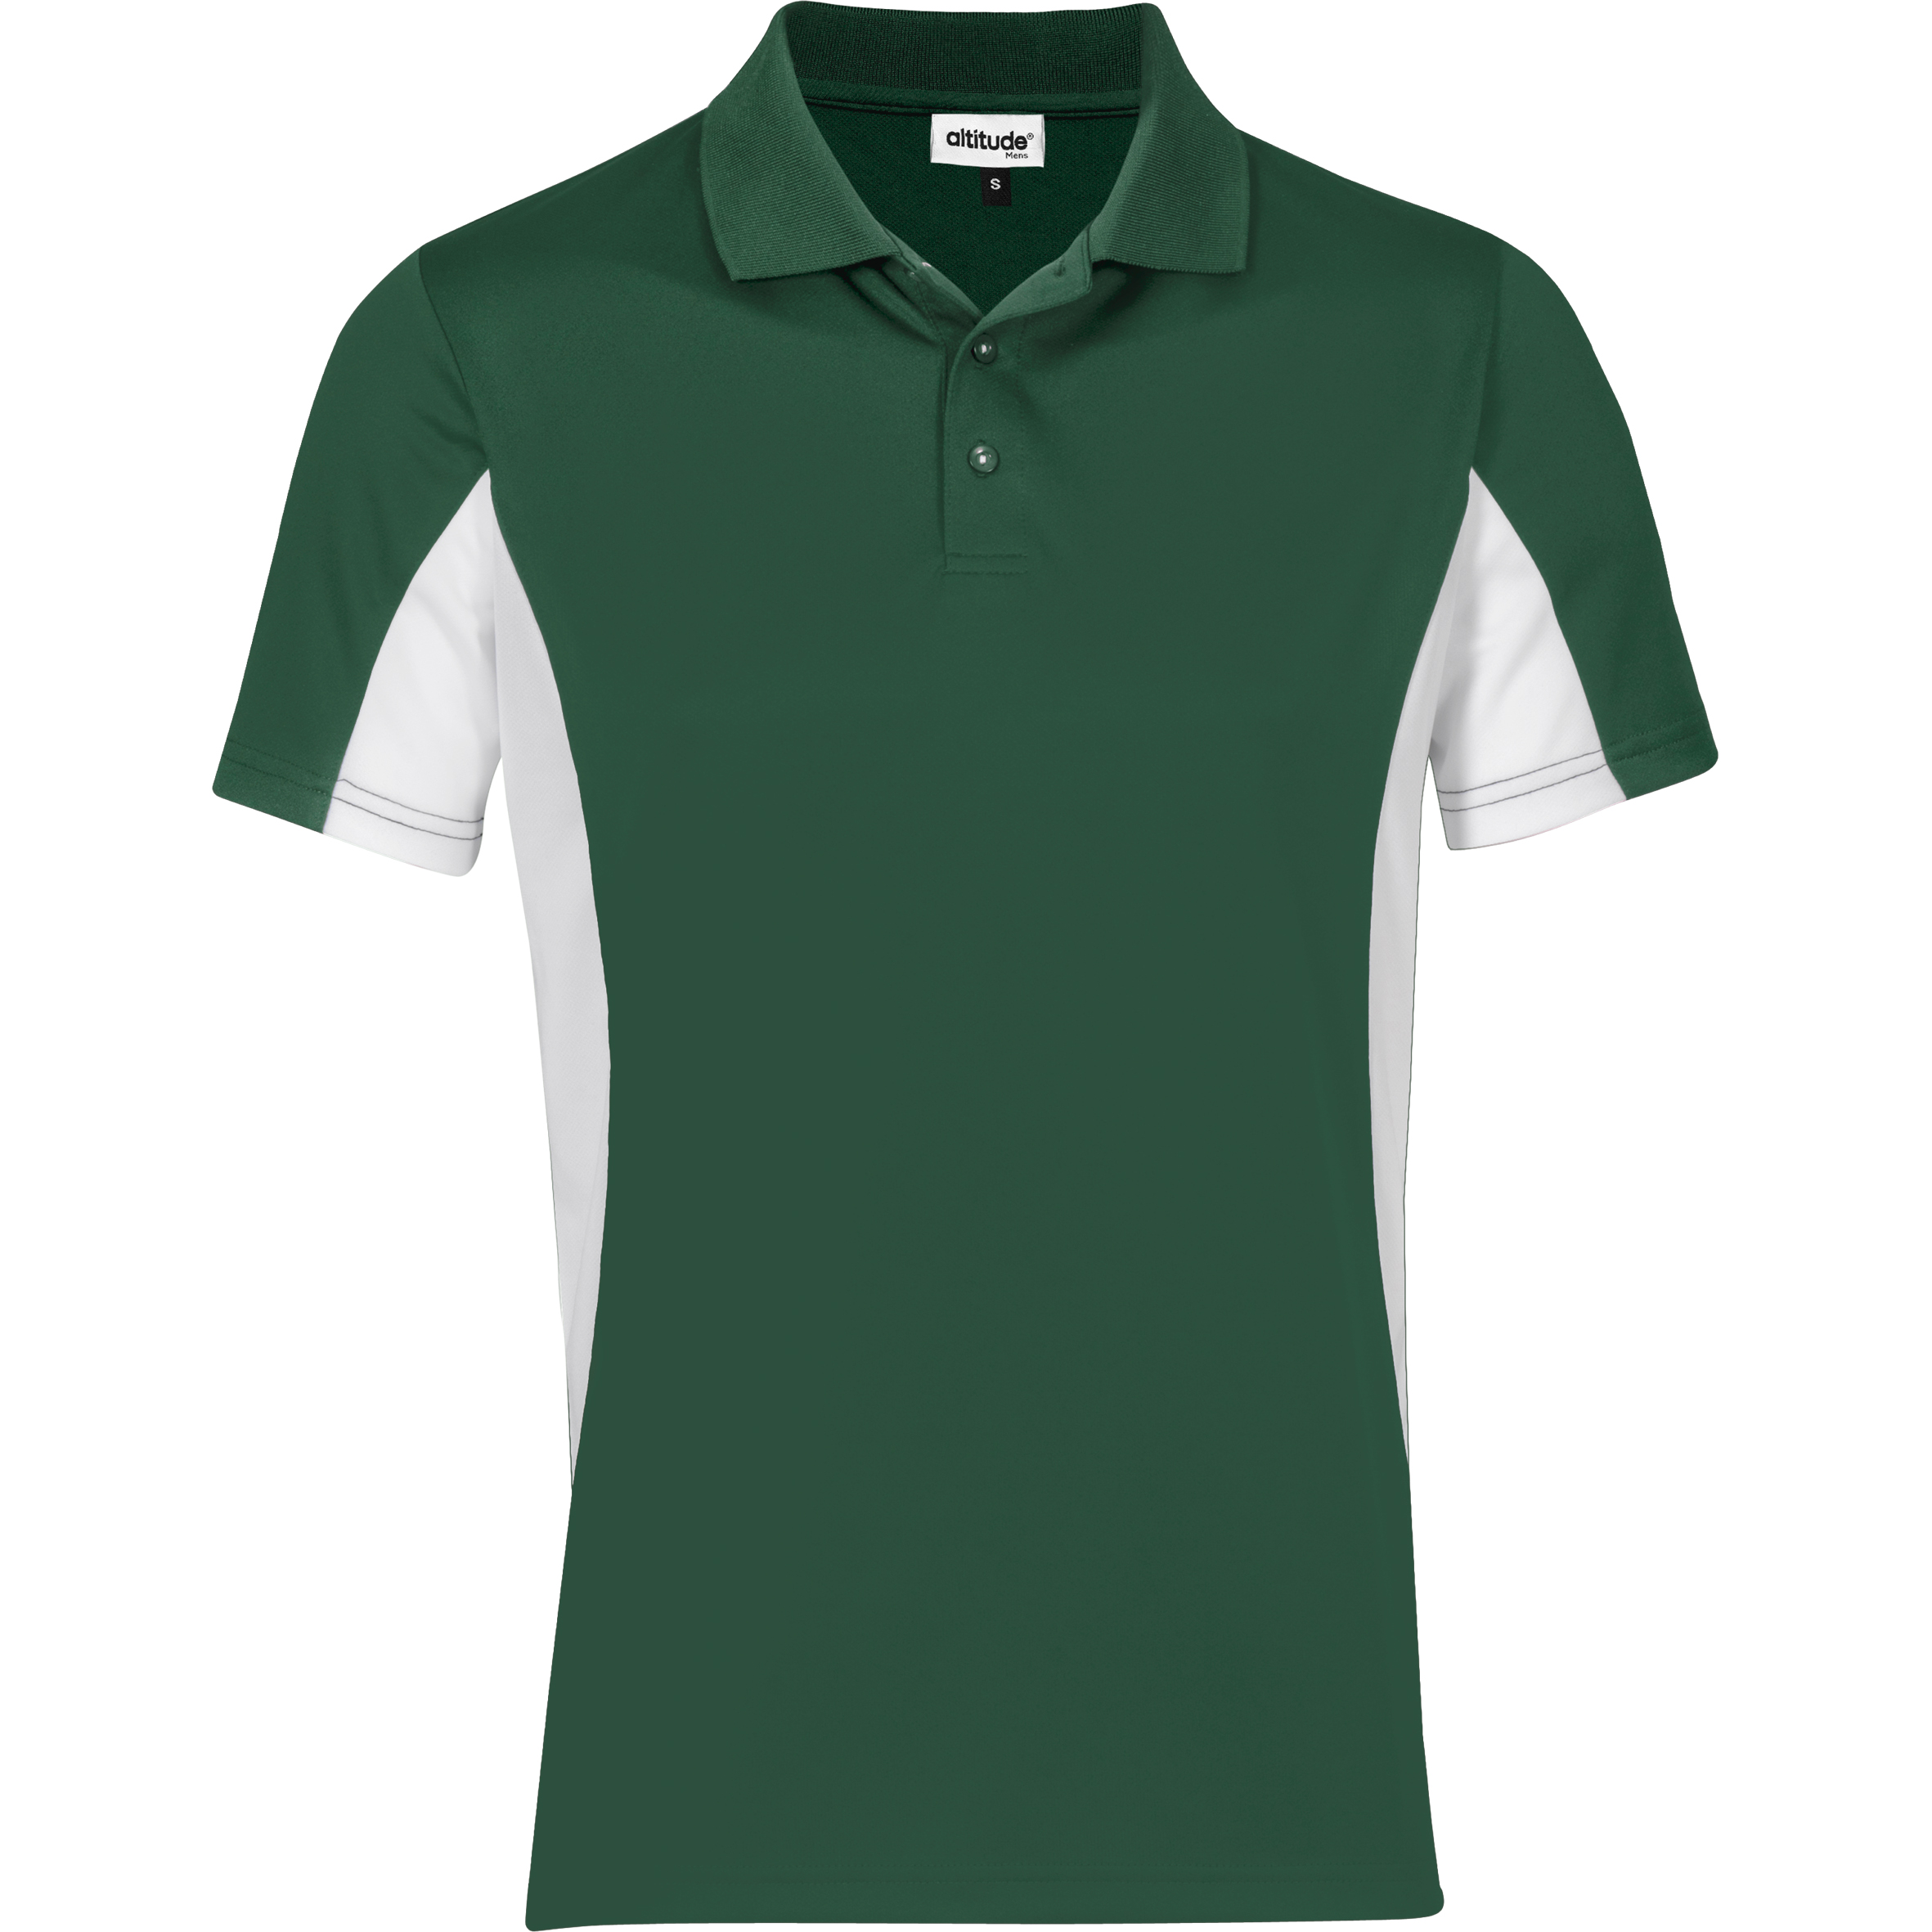 Kids Championship Golf Shirt - Dark Green